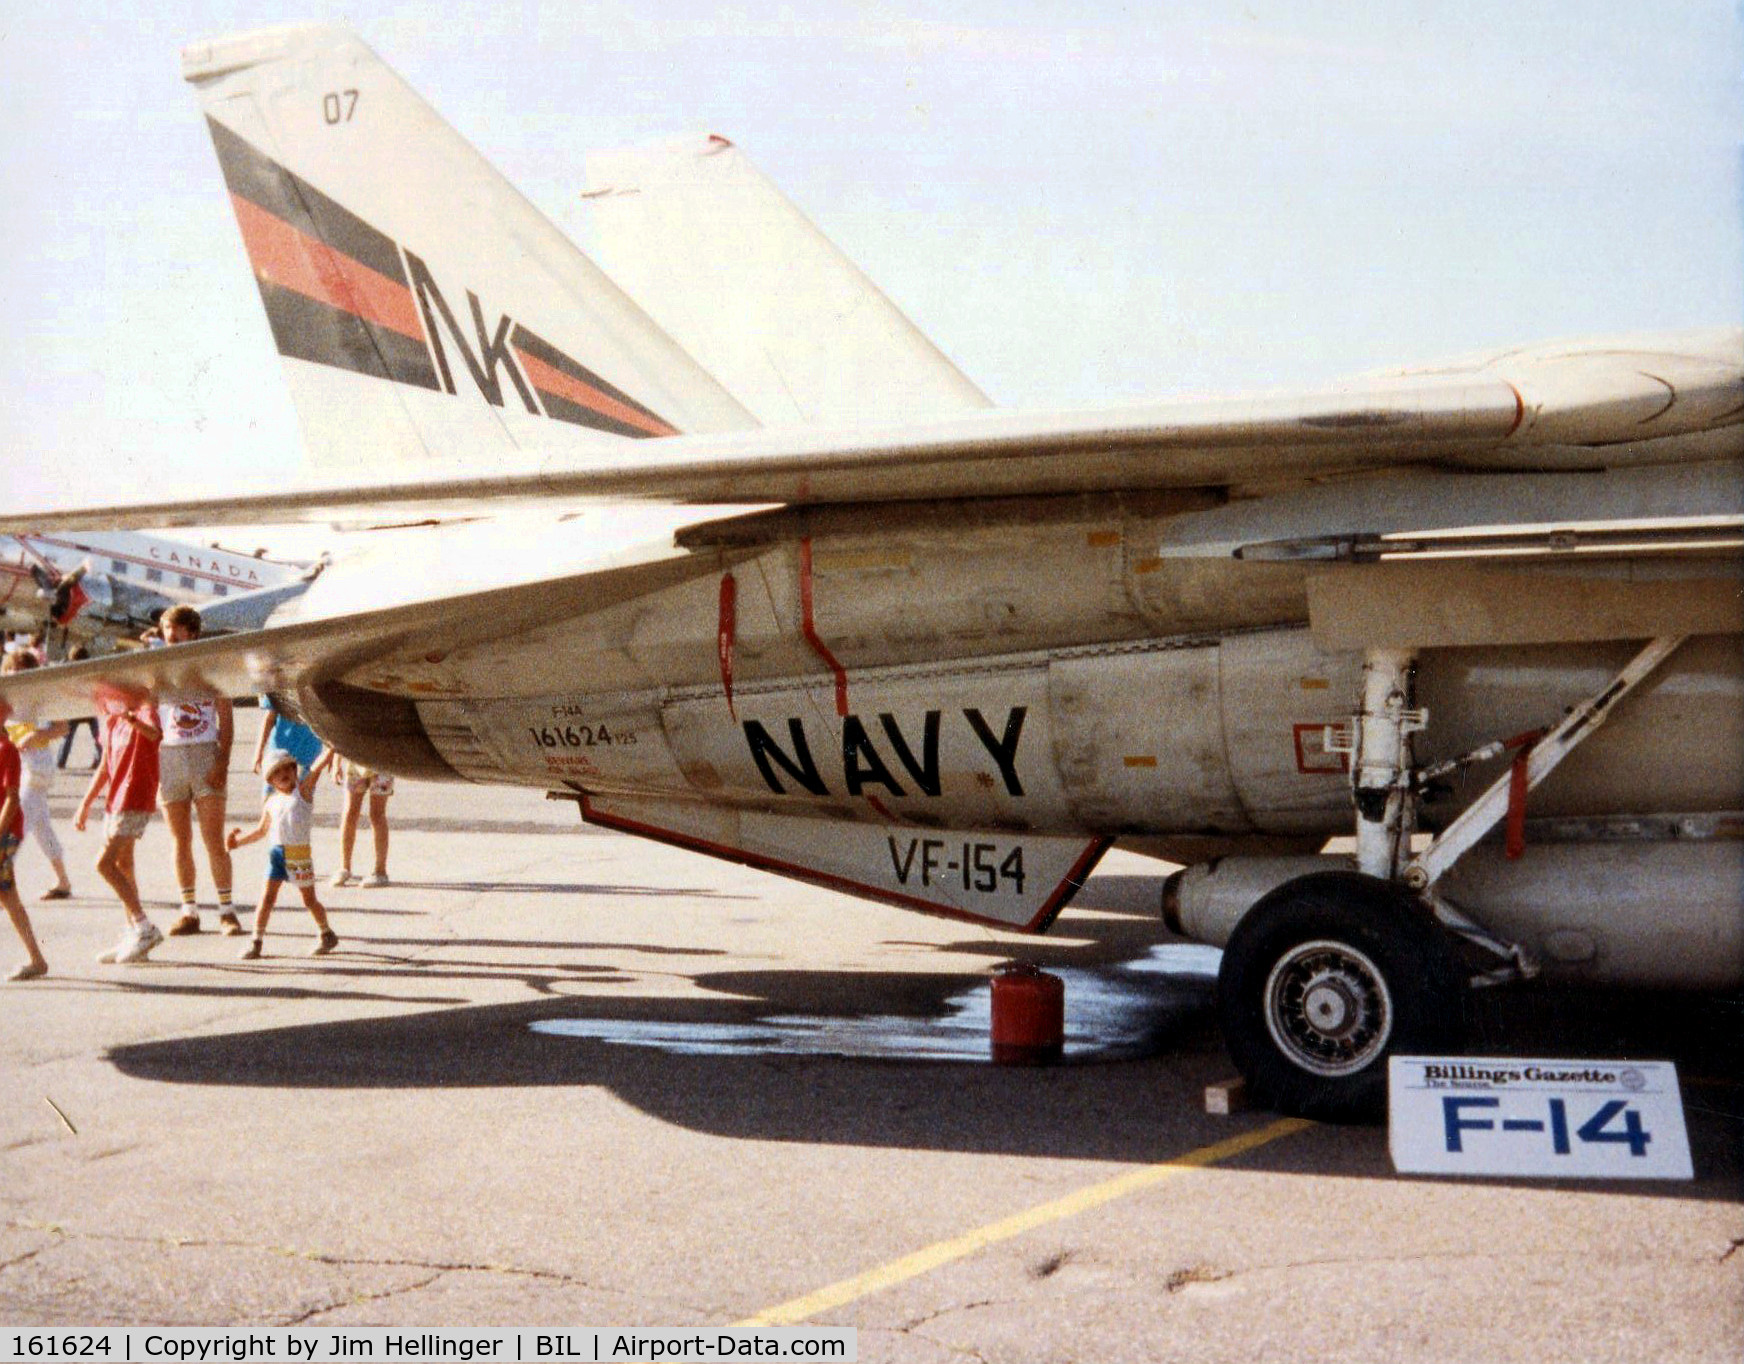 161624, Grumman F-14A Tomcat C/N 483, VF-154 Grumman F-14A Tomcat 161624 (NK-107), at a Billings airshow, 1970's? Photo found in a family album.